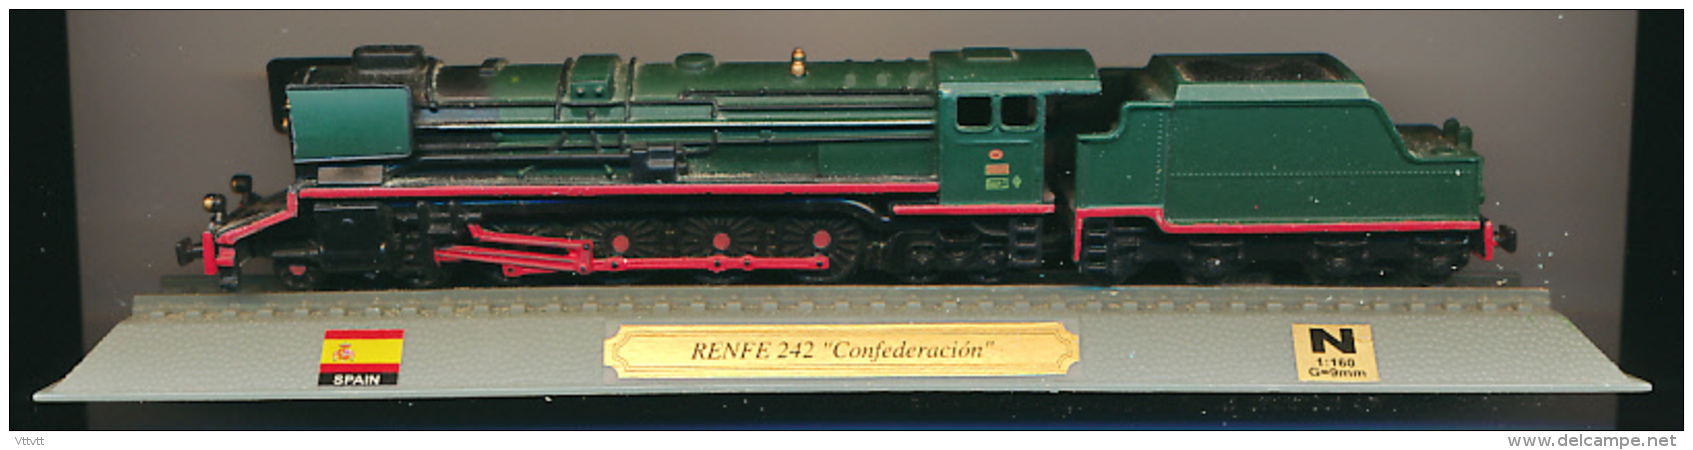 Locomotive : Renfe 242 "Confederacion", Echelle N 1/160, G = 9 Mm, Spain Espagne - Locomotives